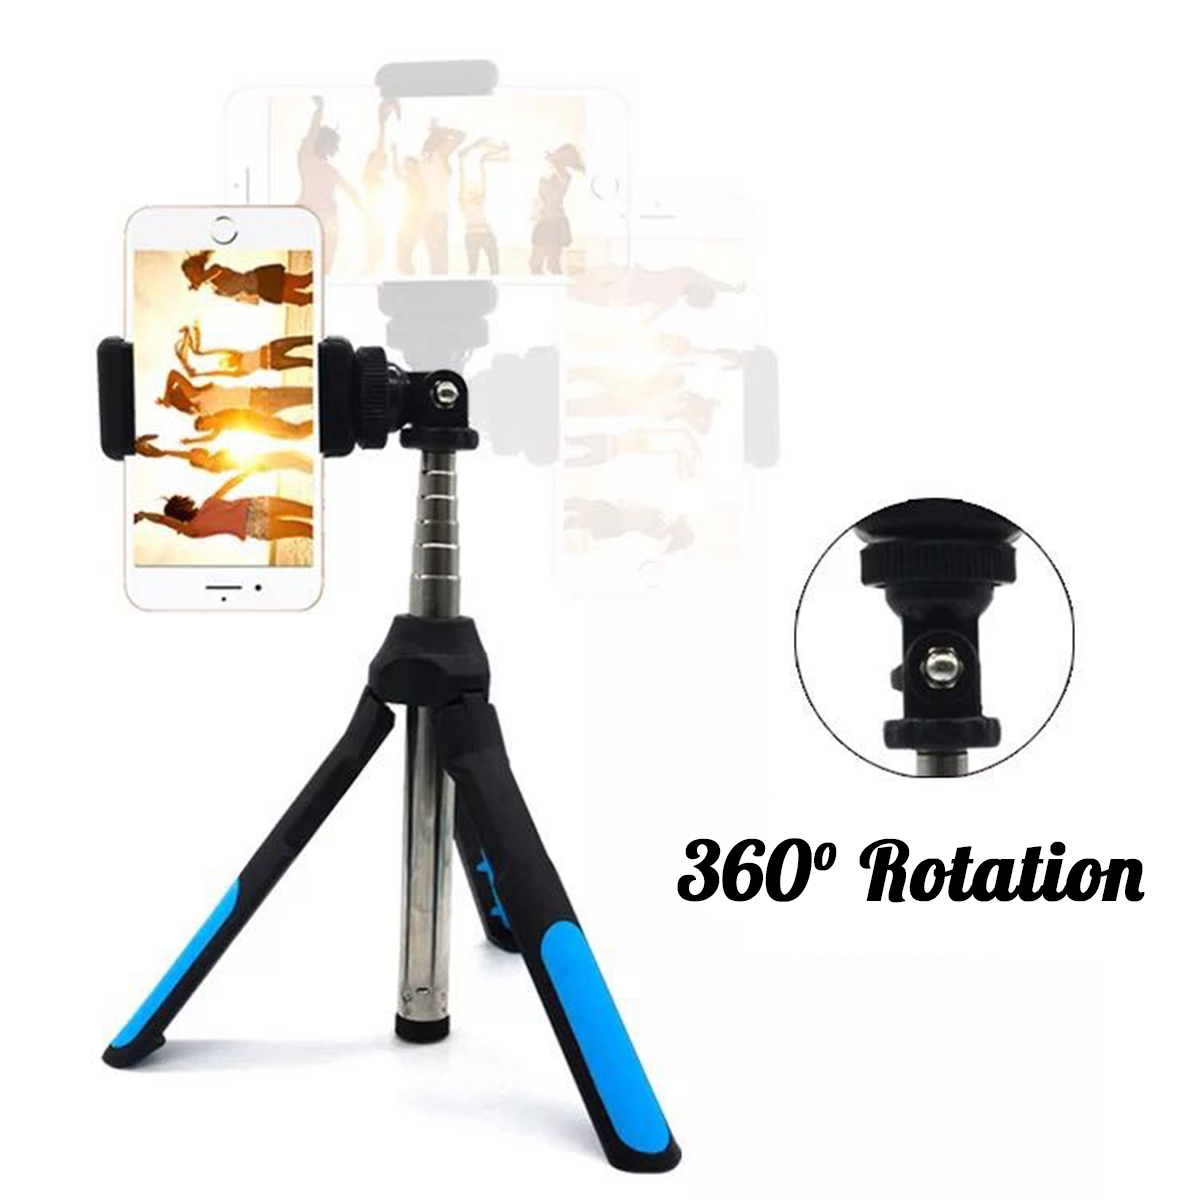 3 in 1 Camera Tripod bluetooth Selfie Stick Wireless Monopod For Gopro 5 6 7 Sports SLR Camera For iPhone XR XS X 8 Smartphone